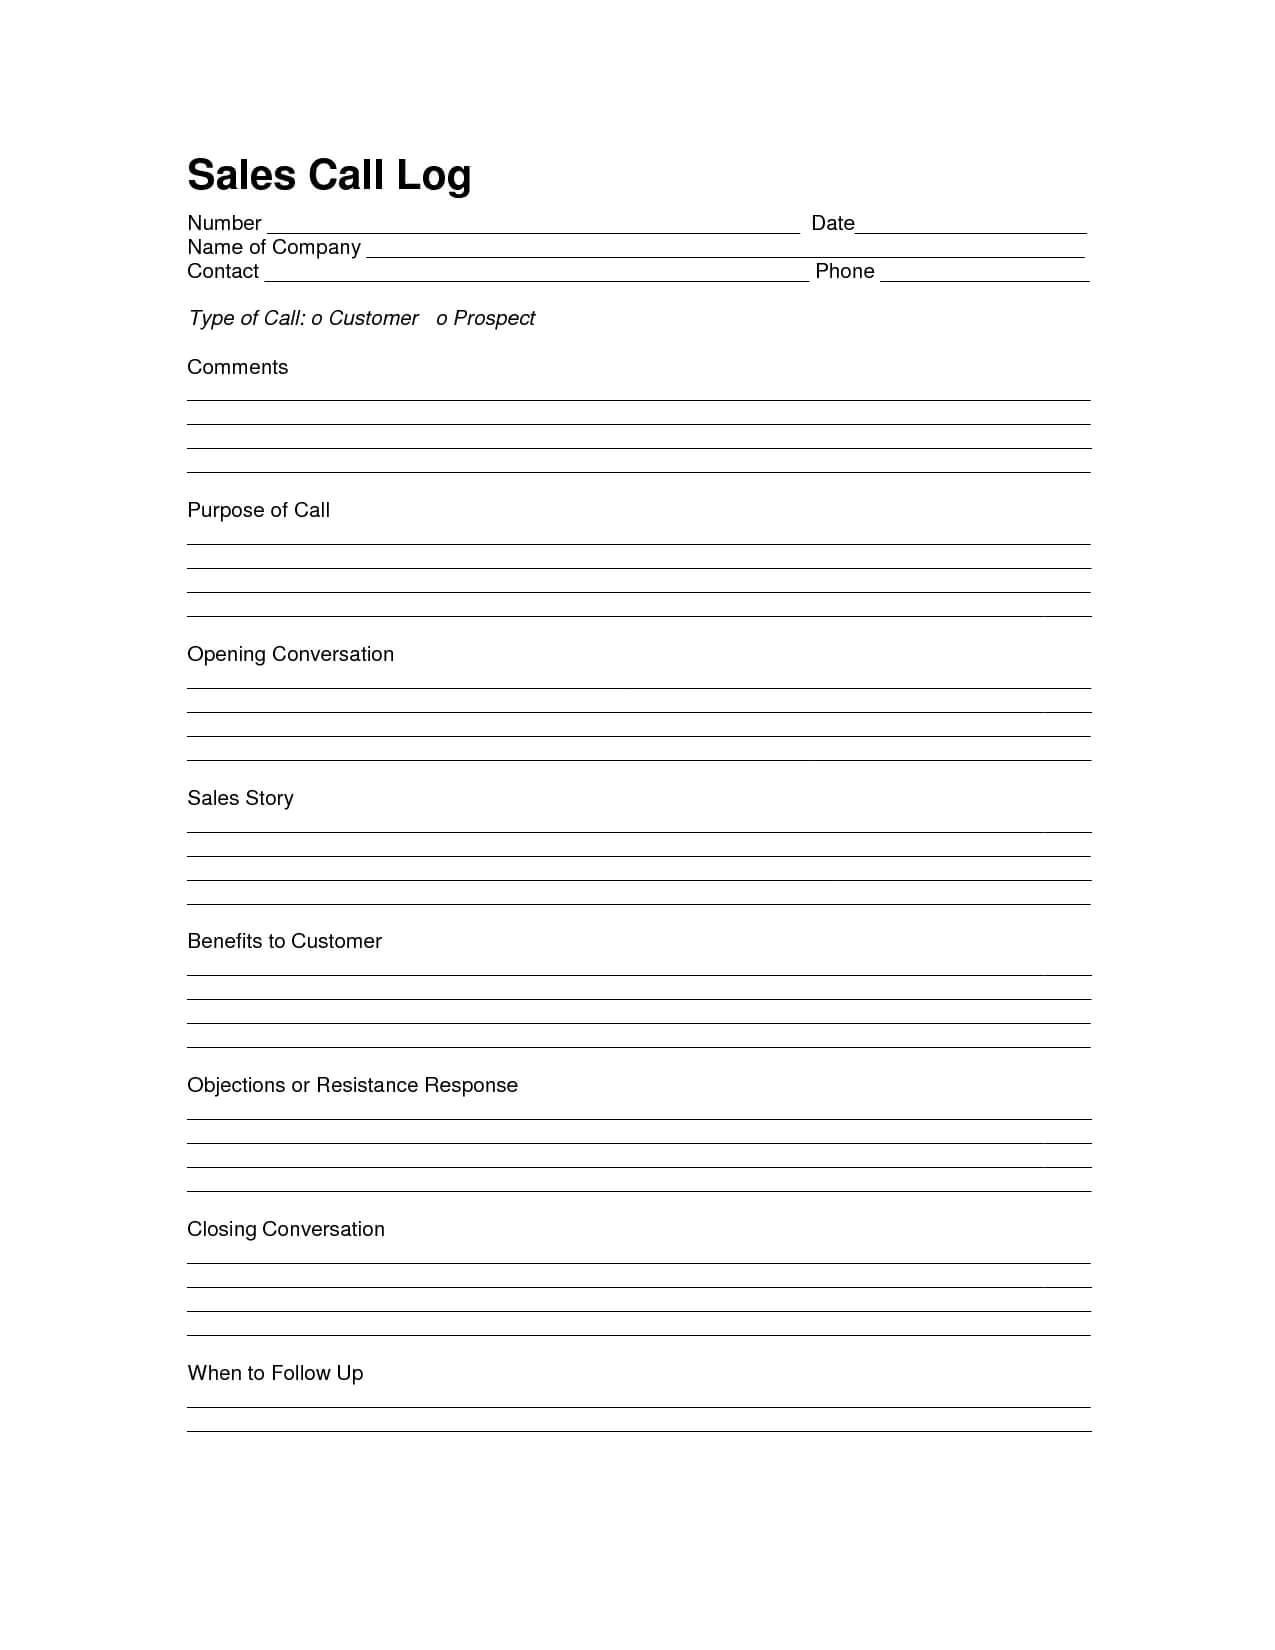 Sales Log Sheet Template | Sales Call Log Template | Sales Intended For Sales Call Report Template